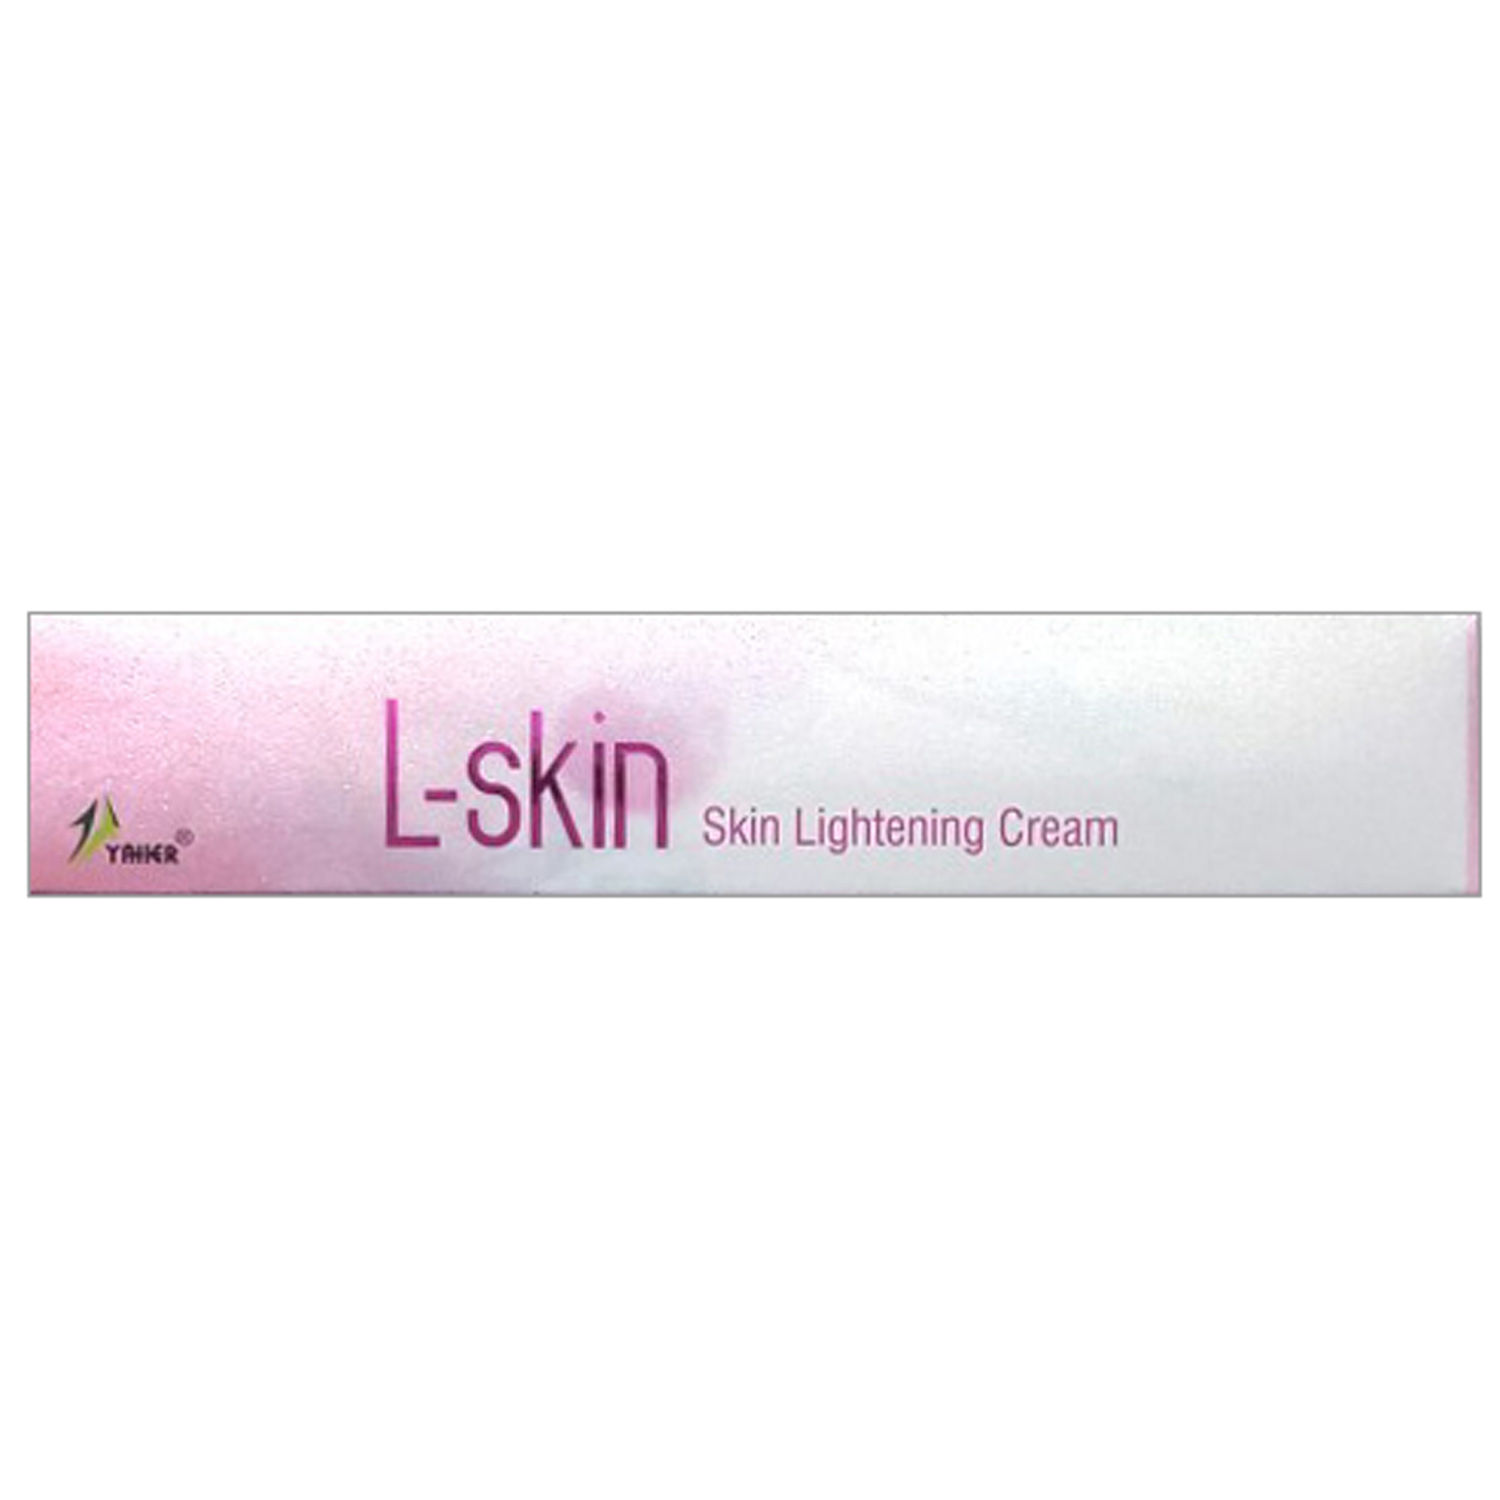 Buy L-Skin Skin Lightening Cream, 15 gm Online